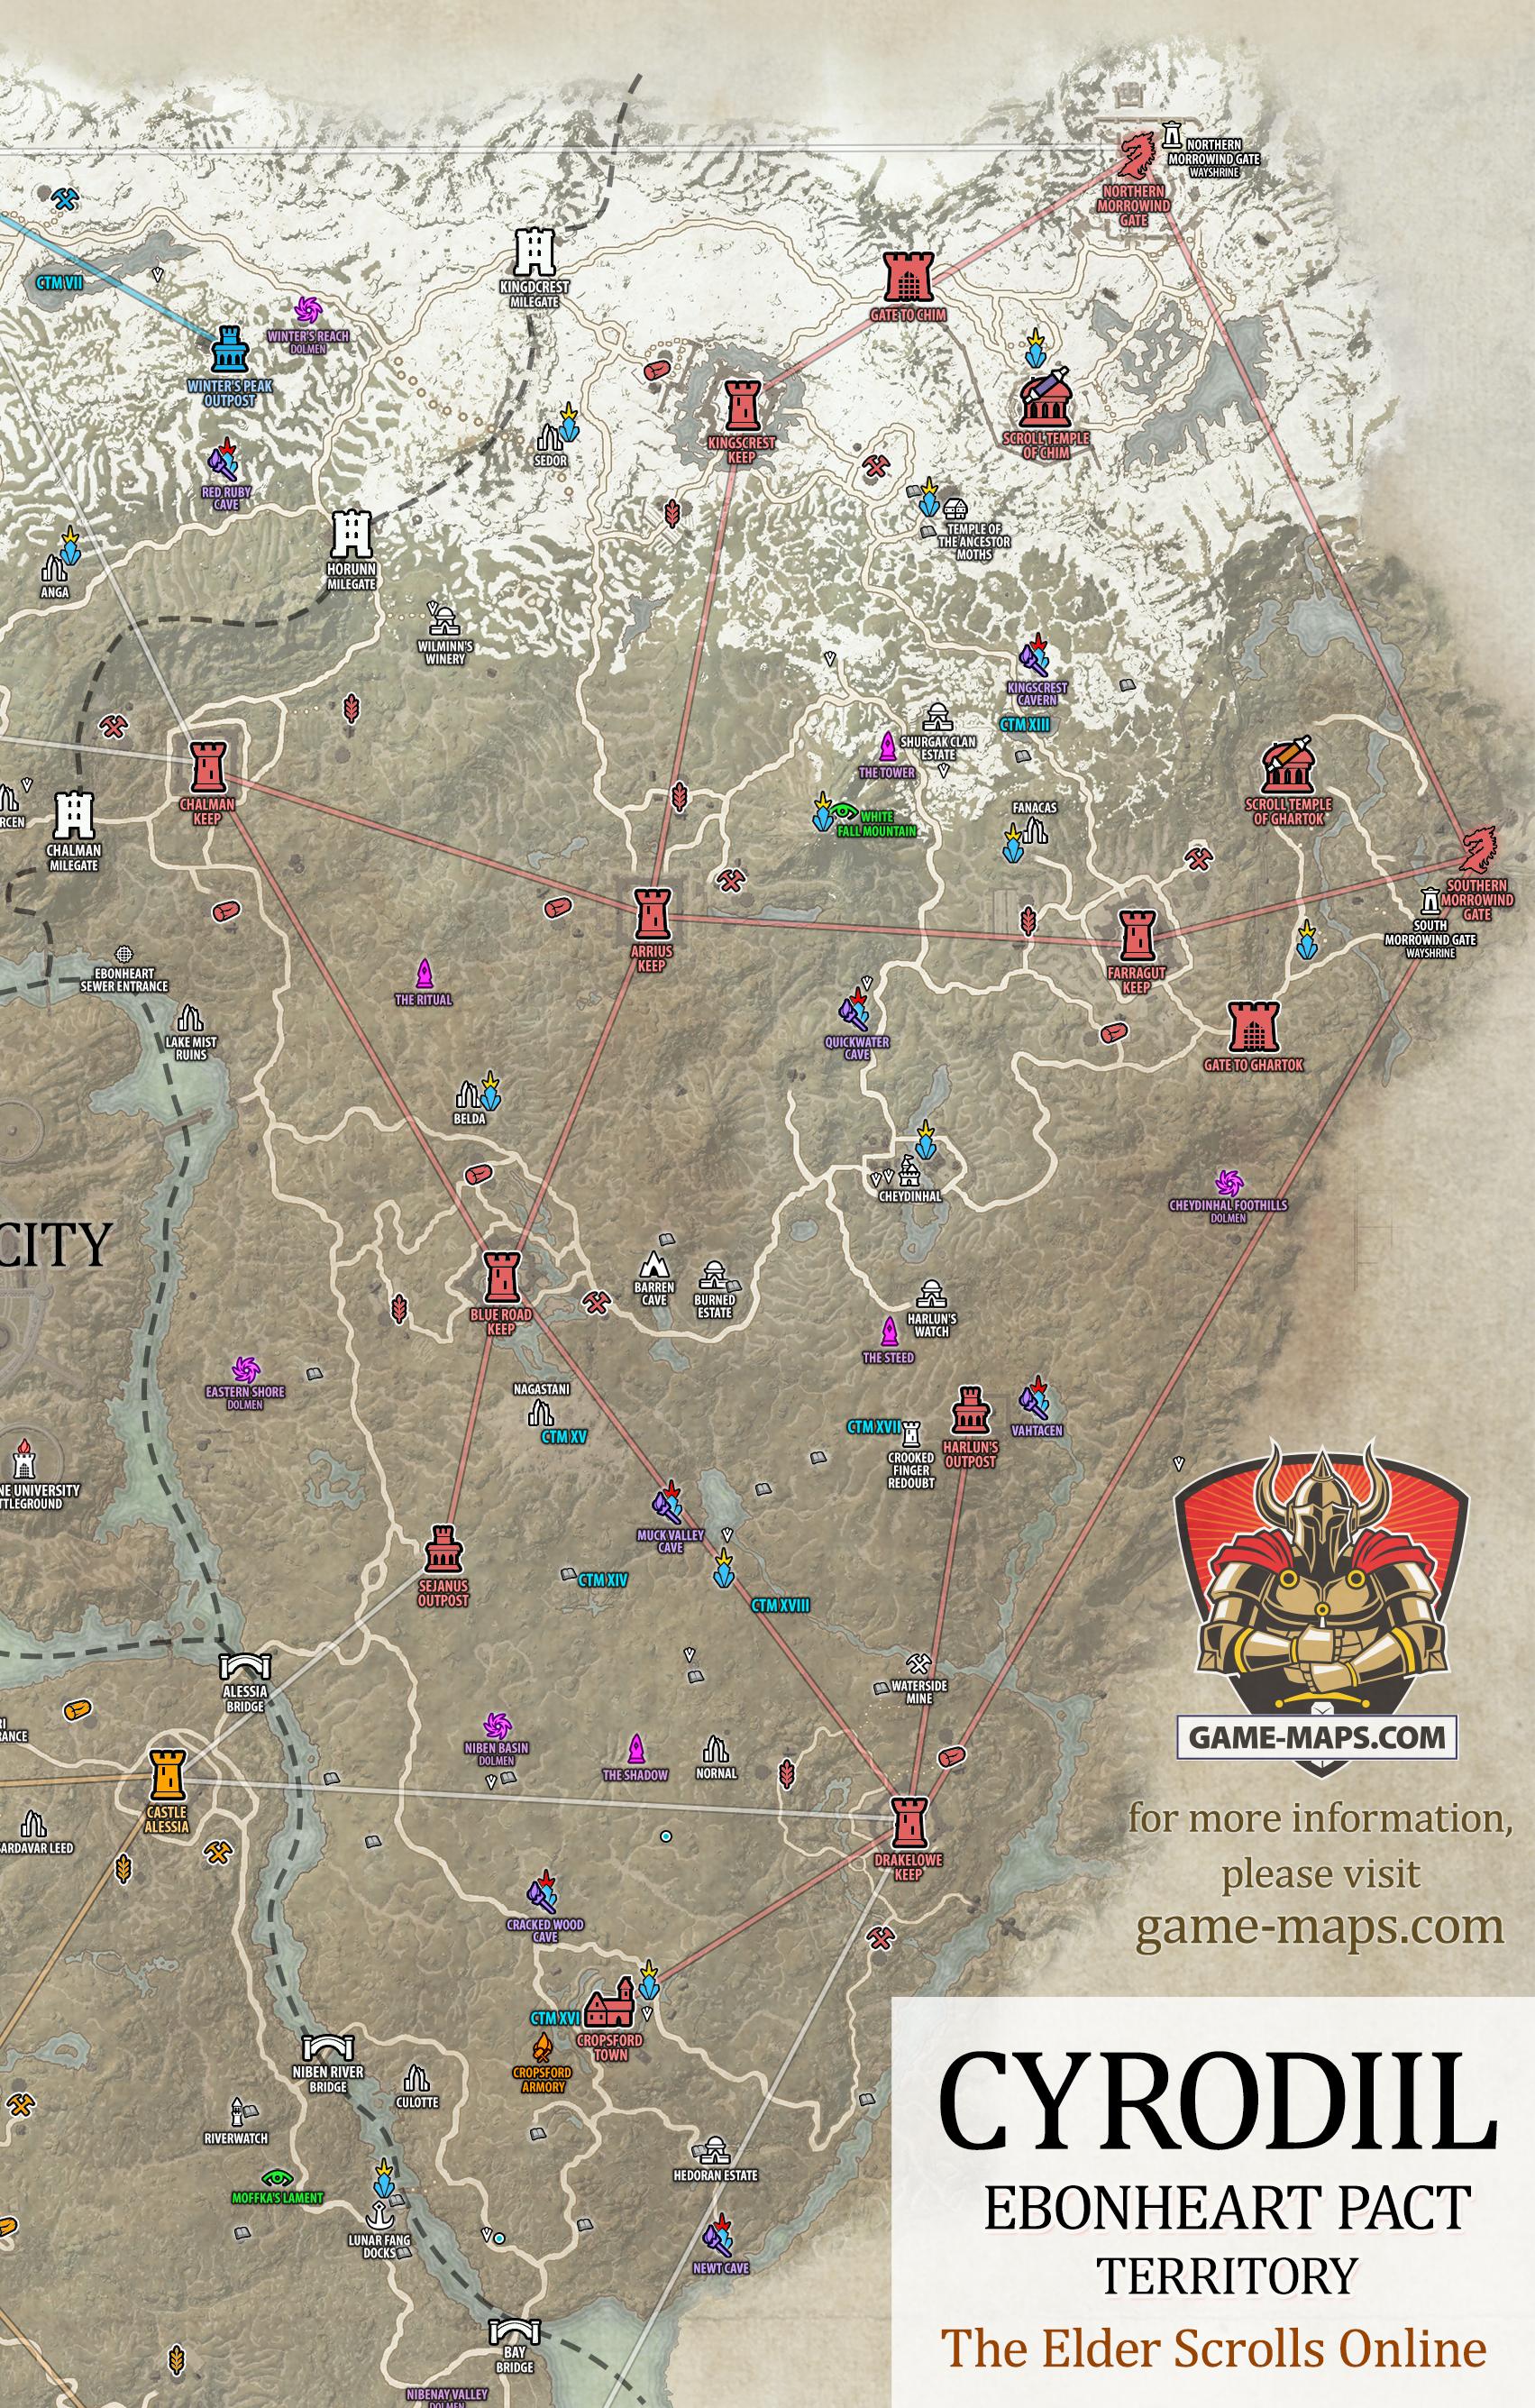 Cyrodiil Ebonheart Pact Territory Map for The Elder Scrolls Online, Alliance War (PvP) (ESO).